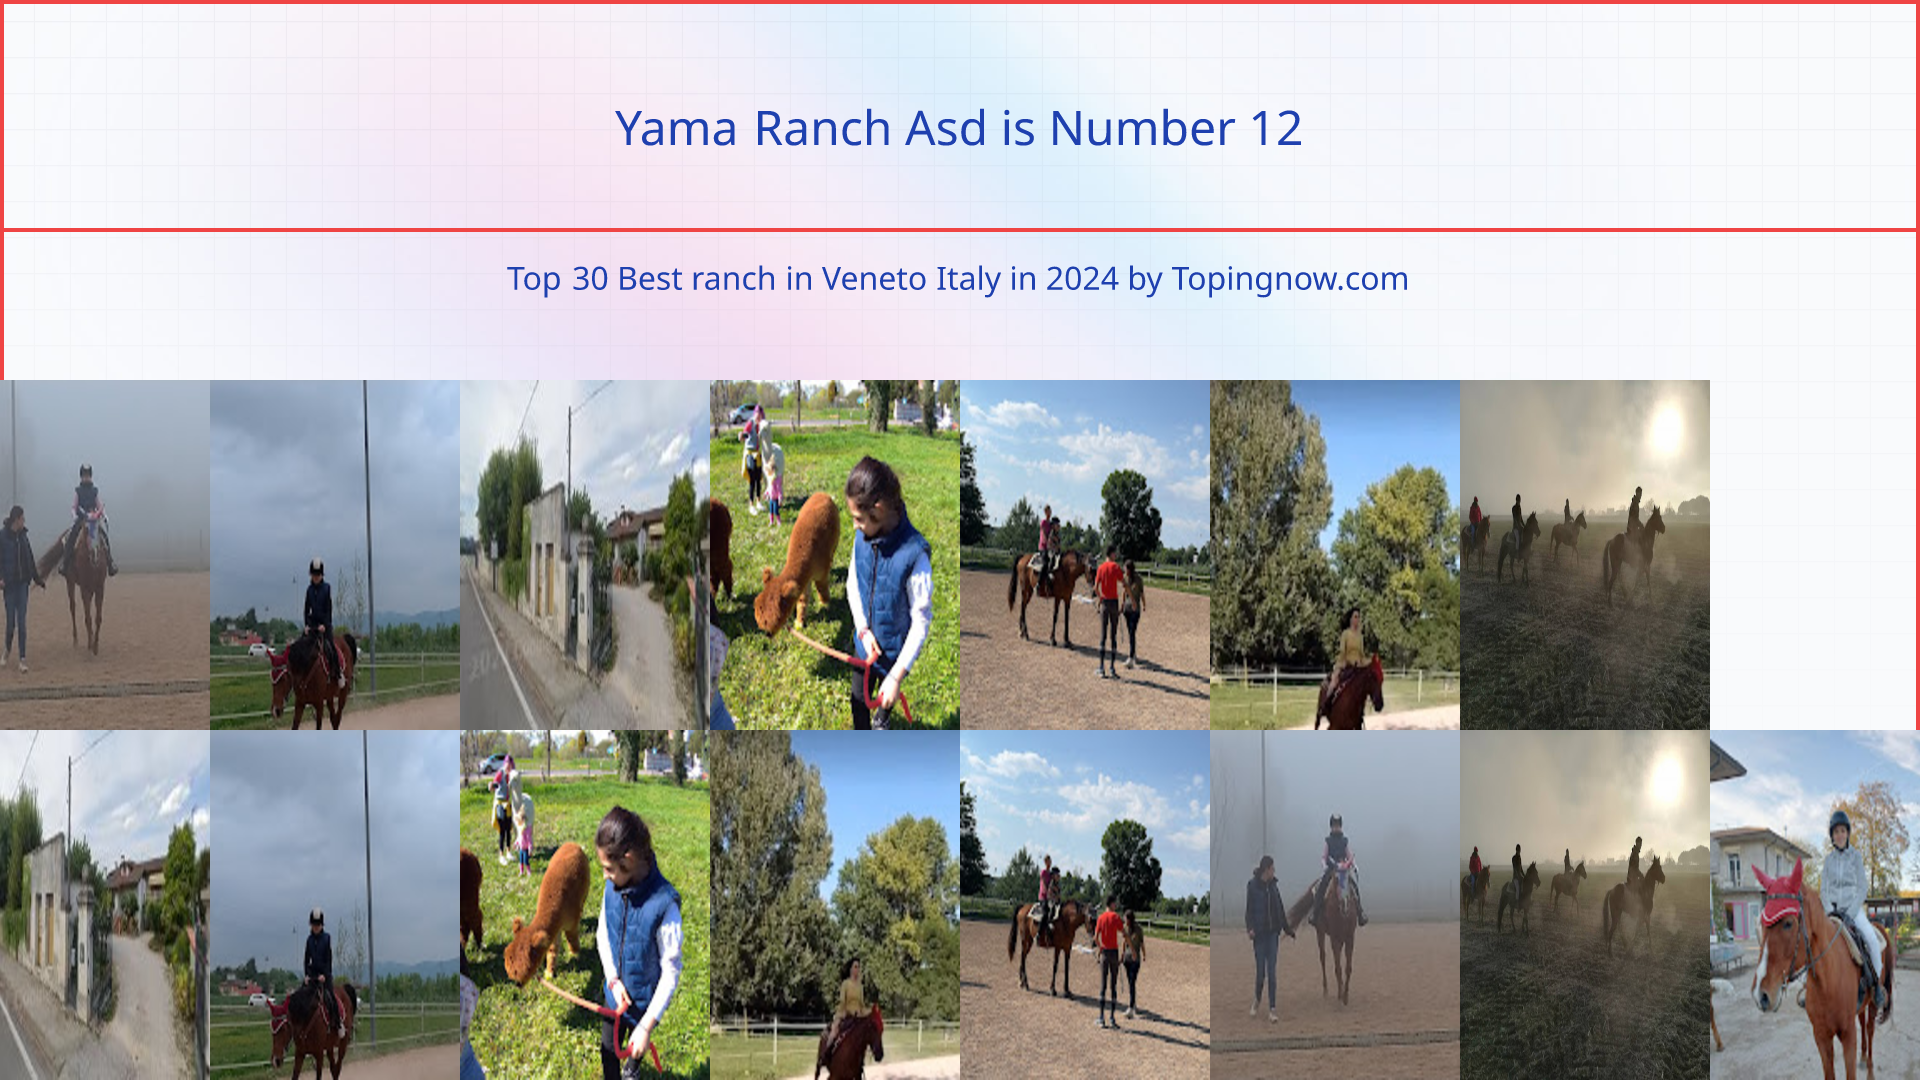 Yama Ranch Asd: Top 30 Best ranch in Veneto Italy in 2024